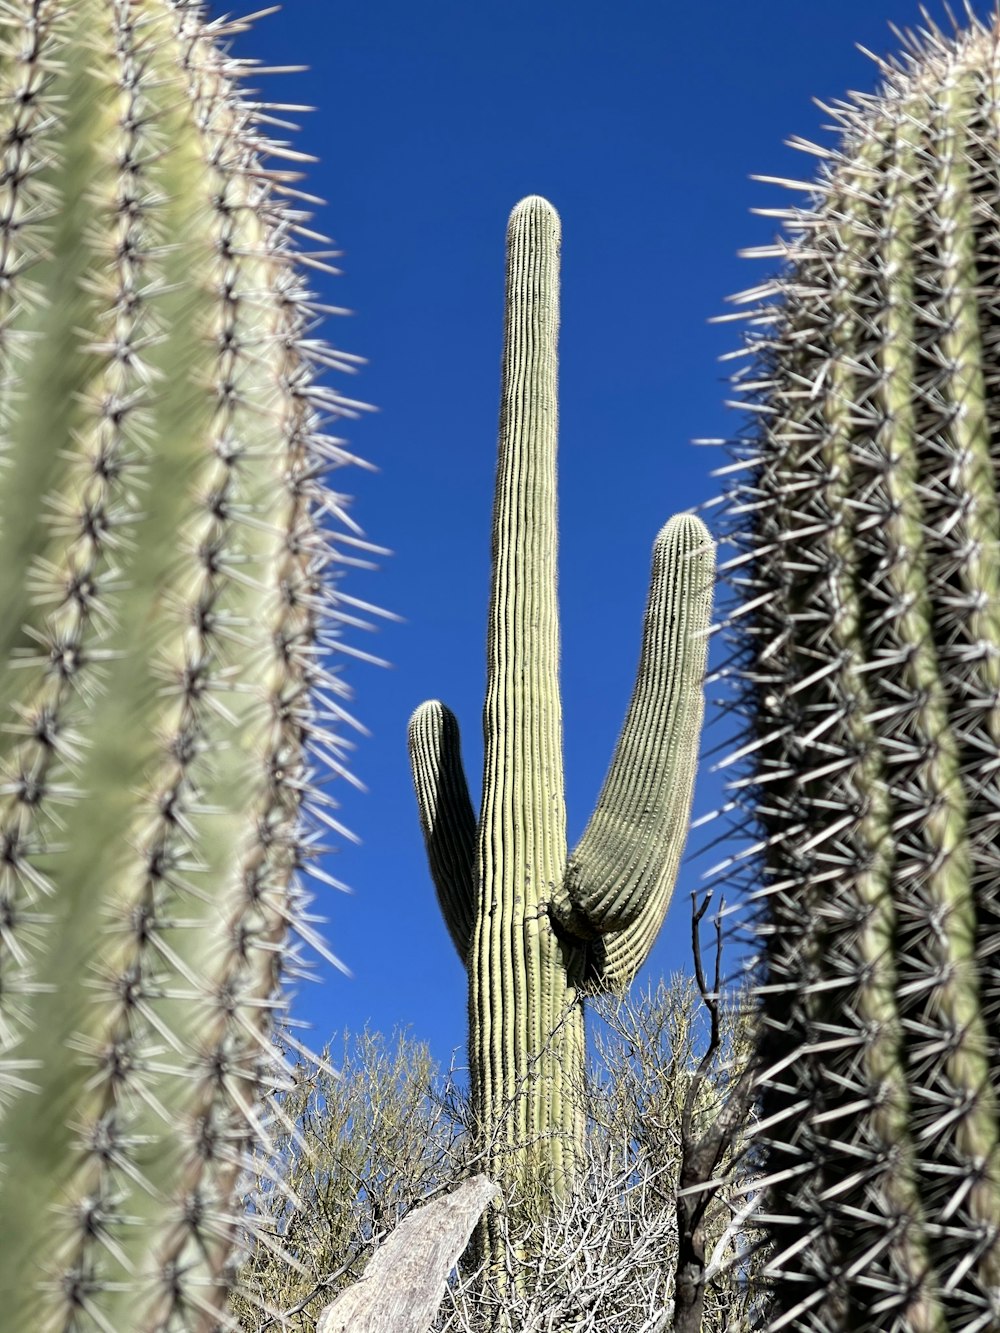 green cactus plant during daytime